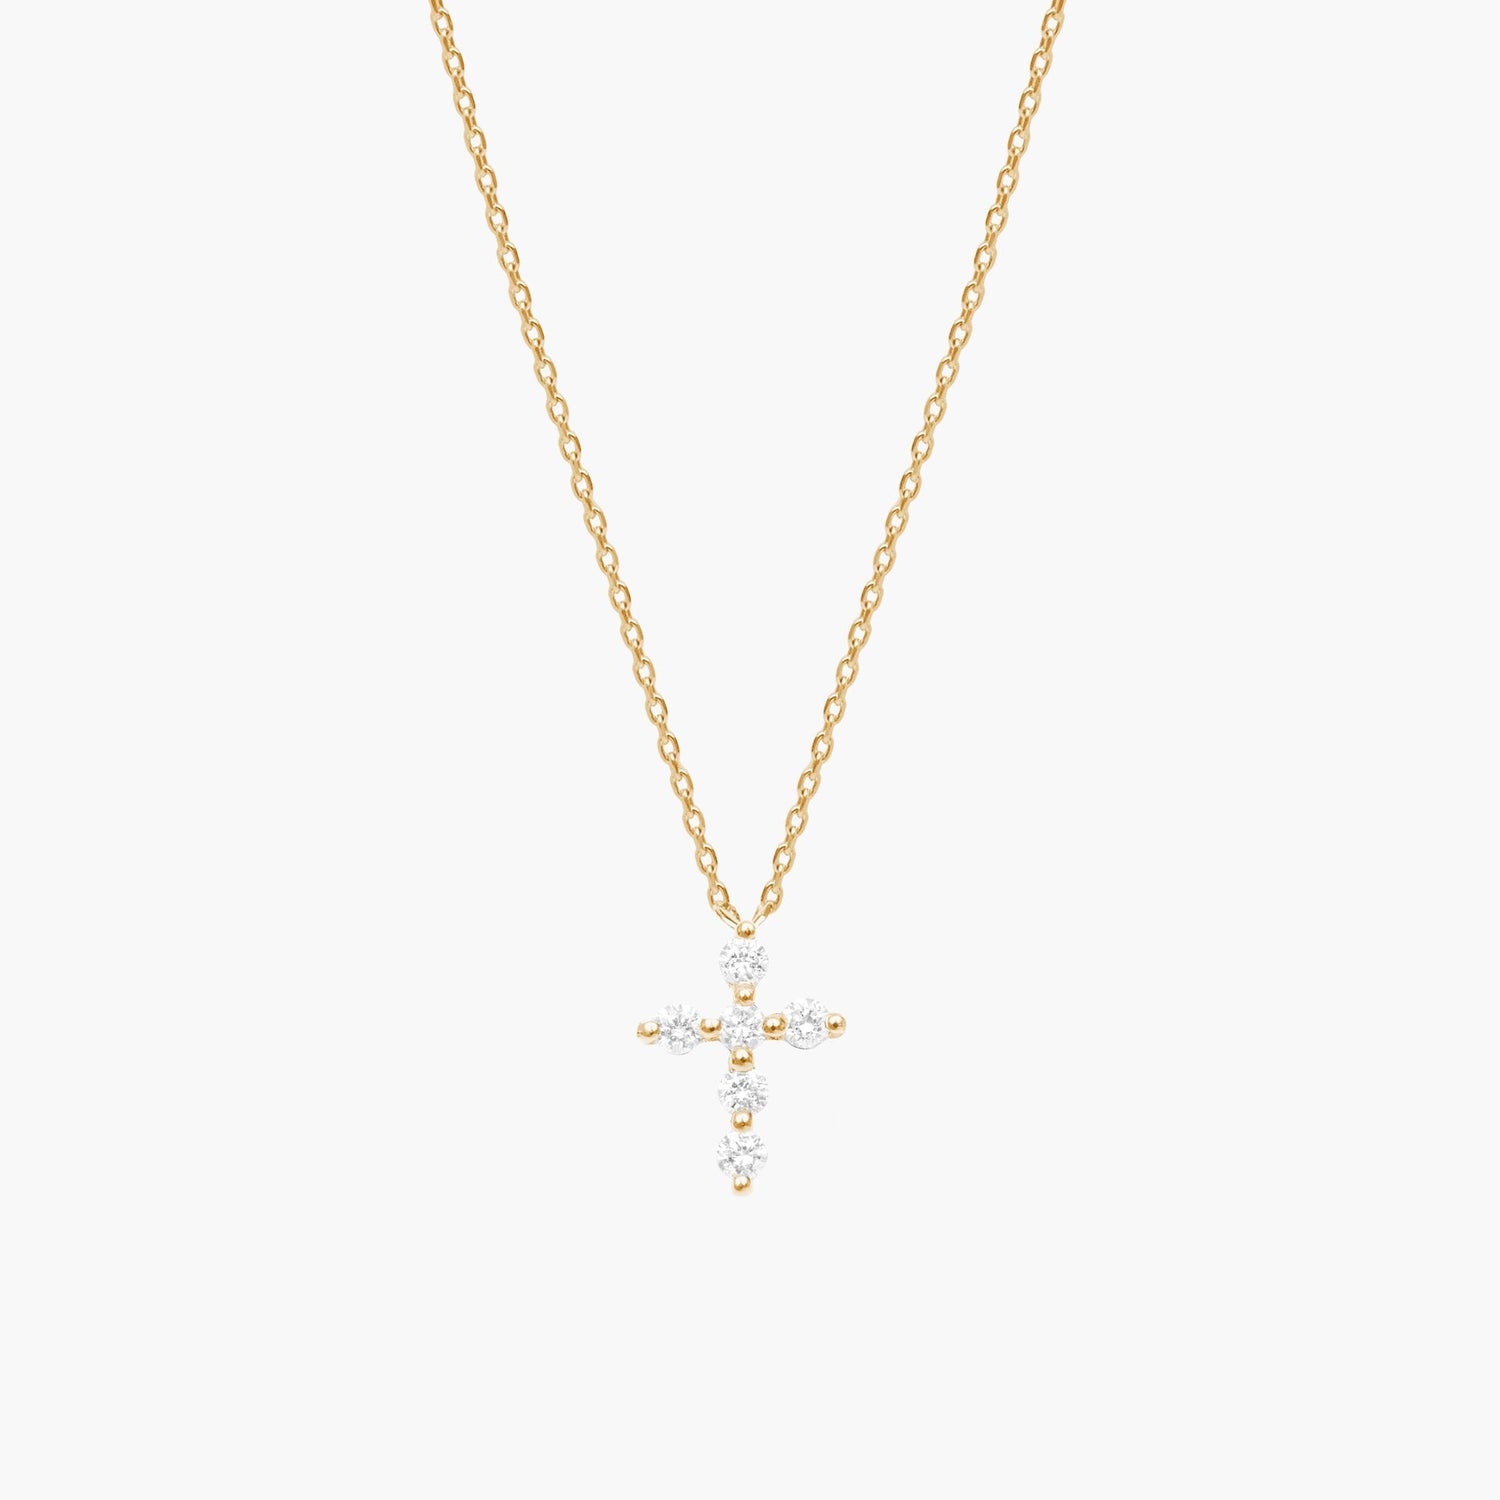 Diamond & Pink Tourmaline Cross Pendant 14K White Gold / Chain NOT Included  / Gift for Her / Large Diamond Cross Pendant - Etsy